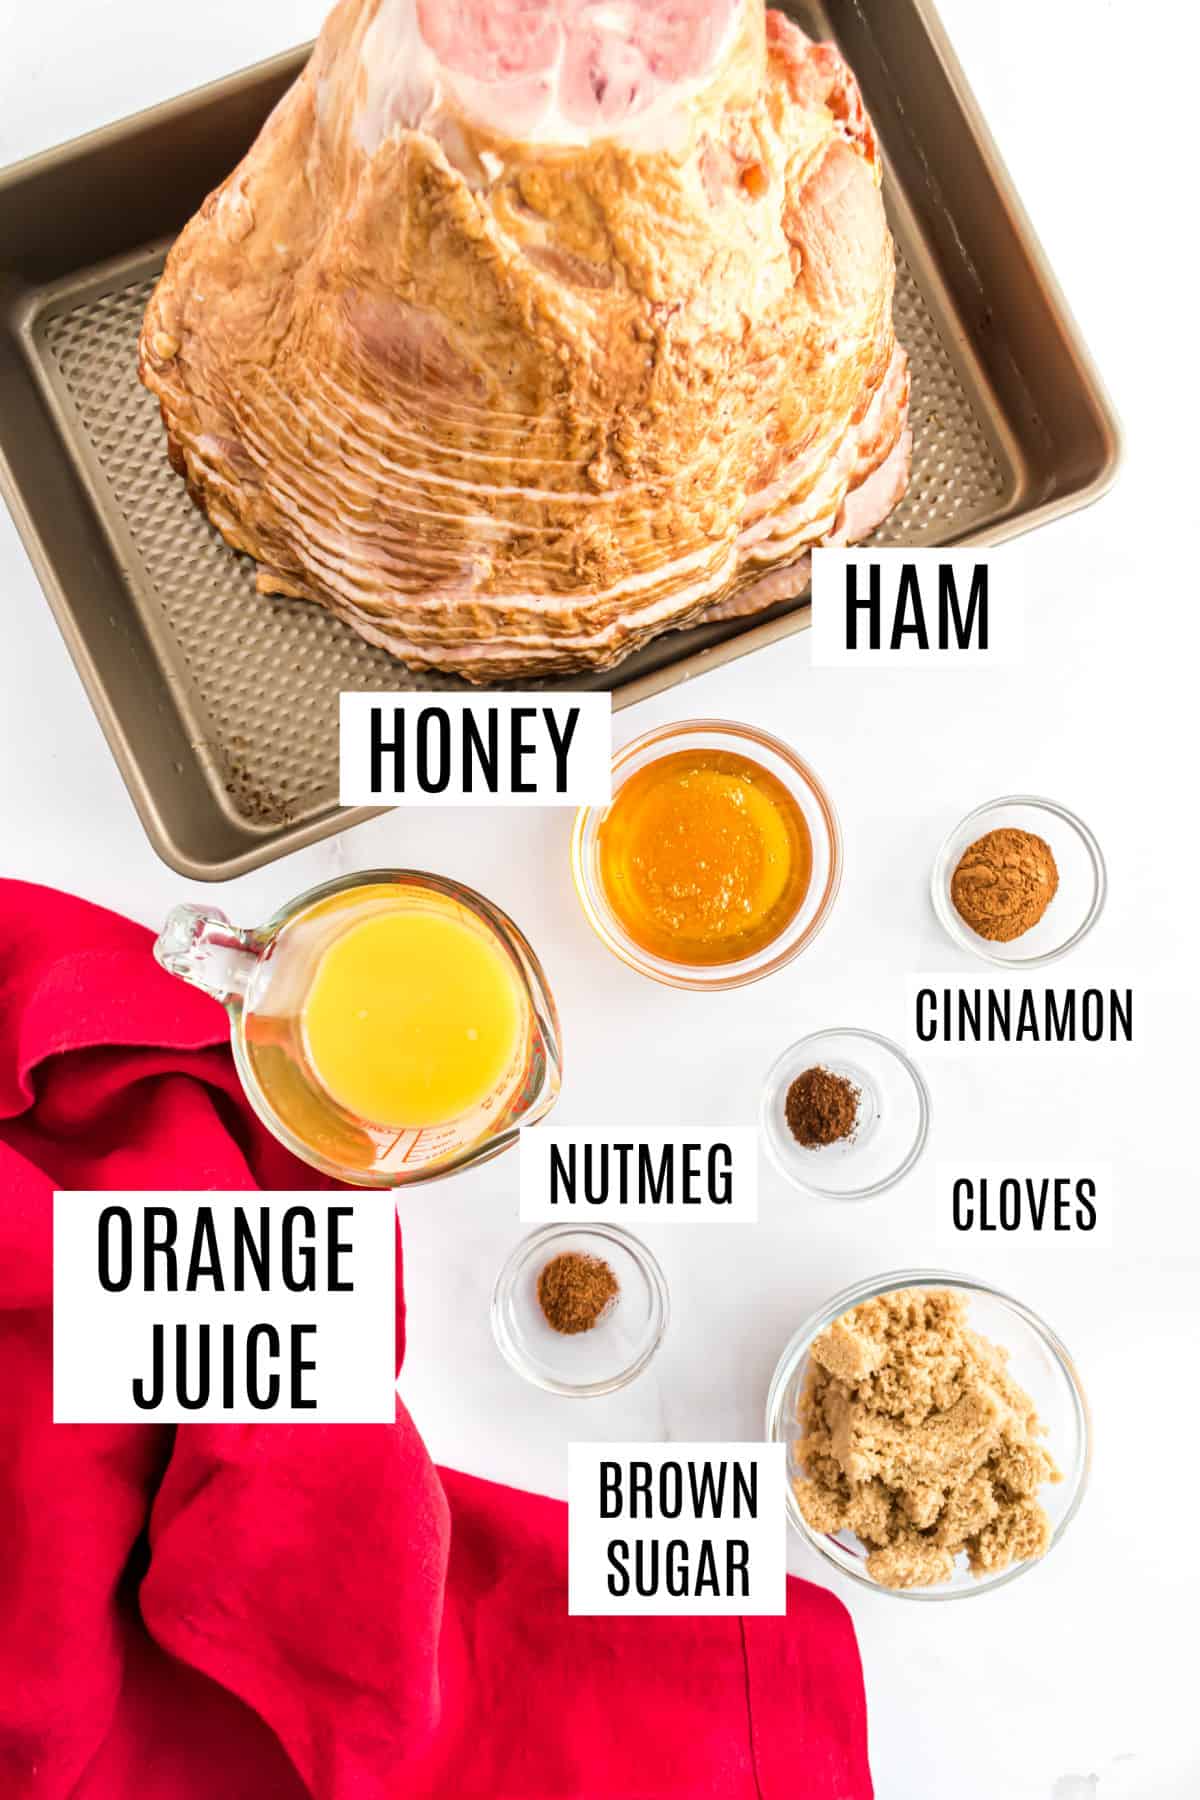 Ingredients needed to make honey baked ham.